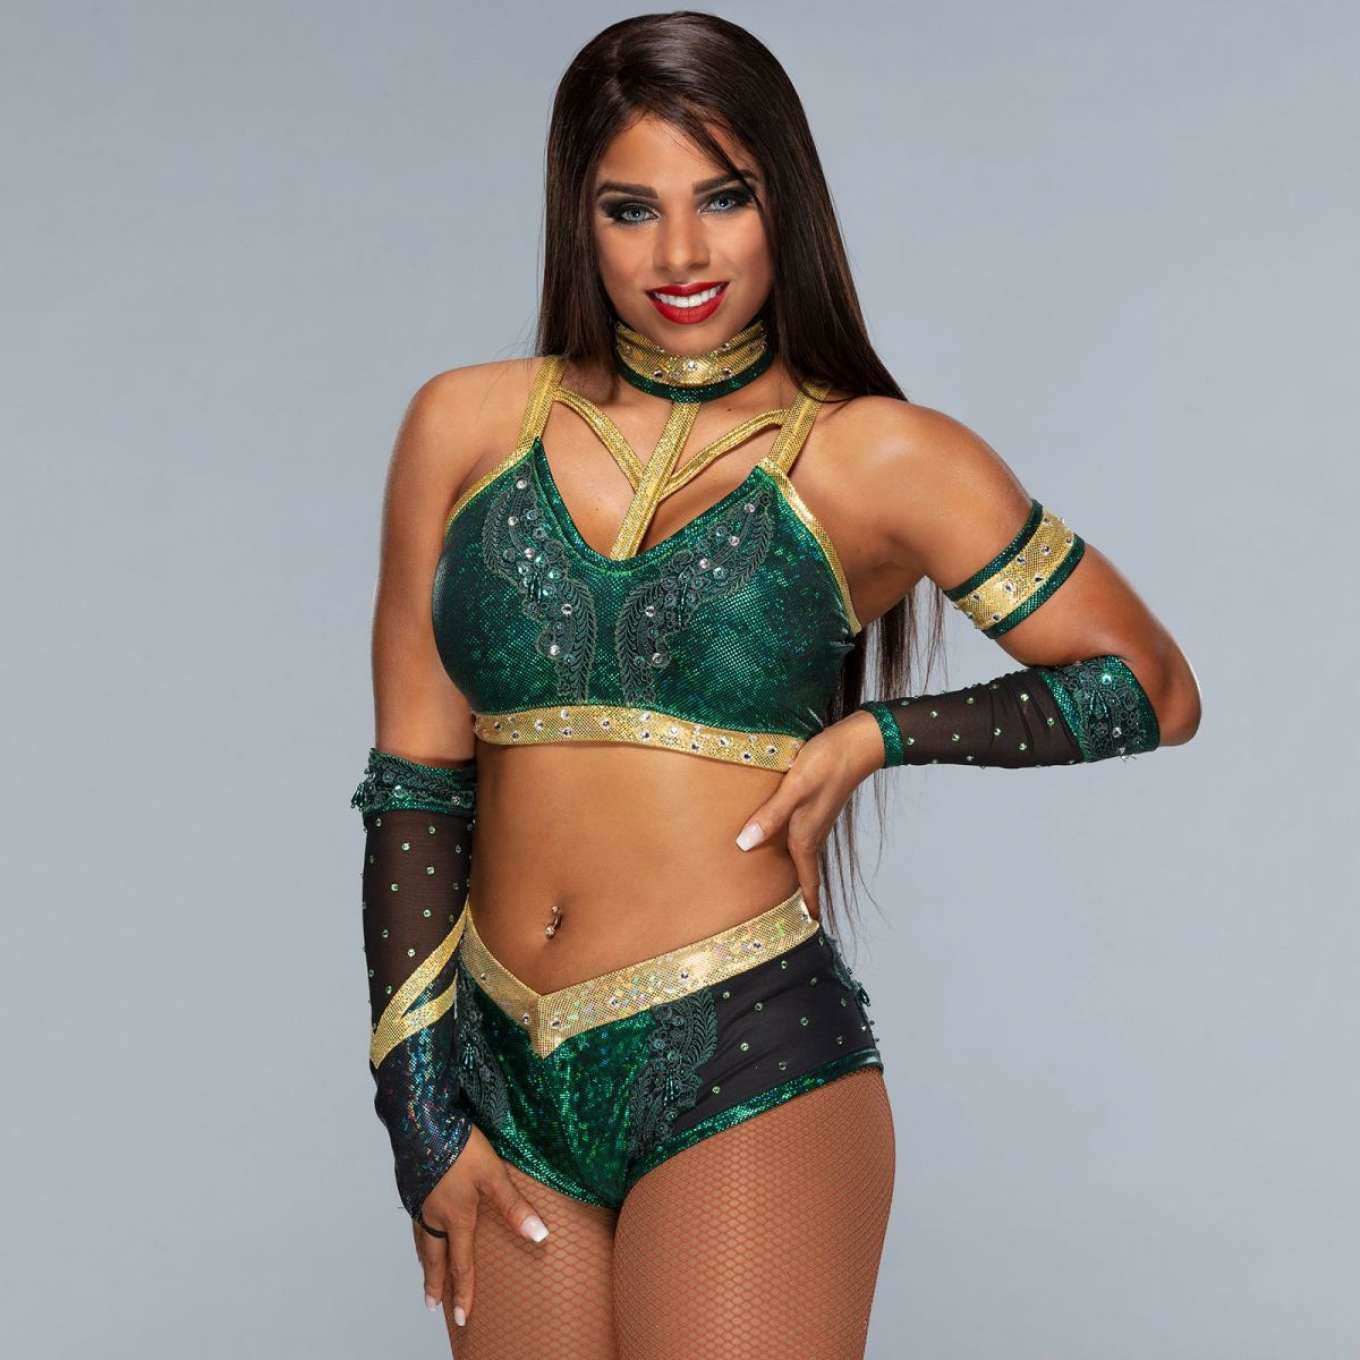 Sexy WWE Diva Renee Michelle.